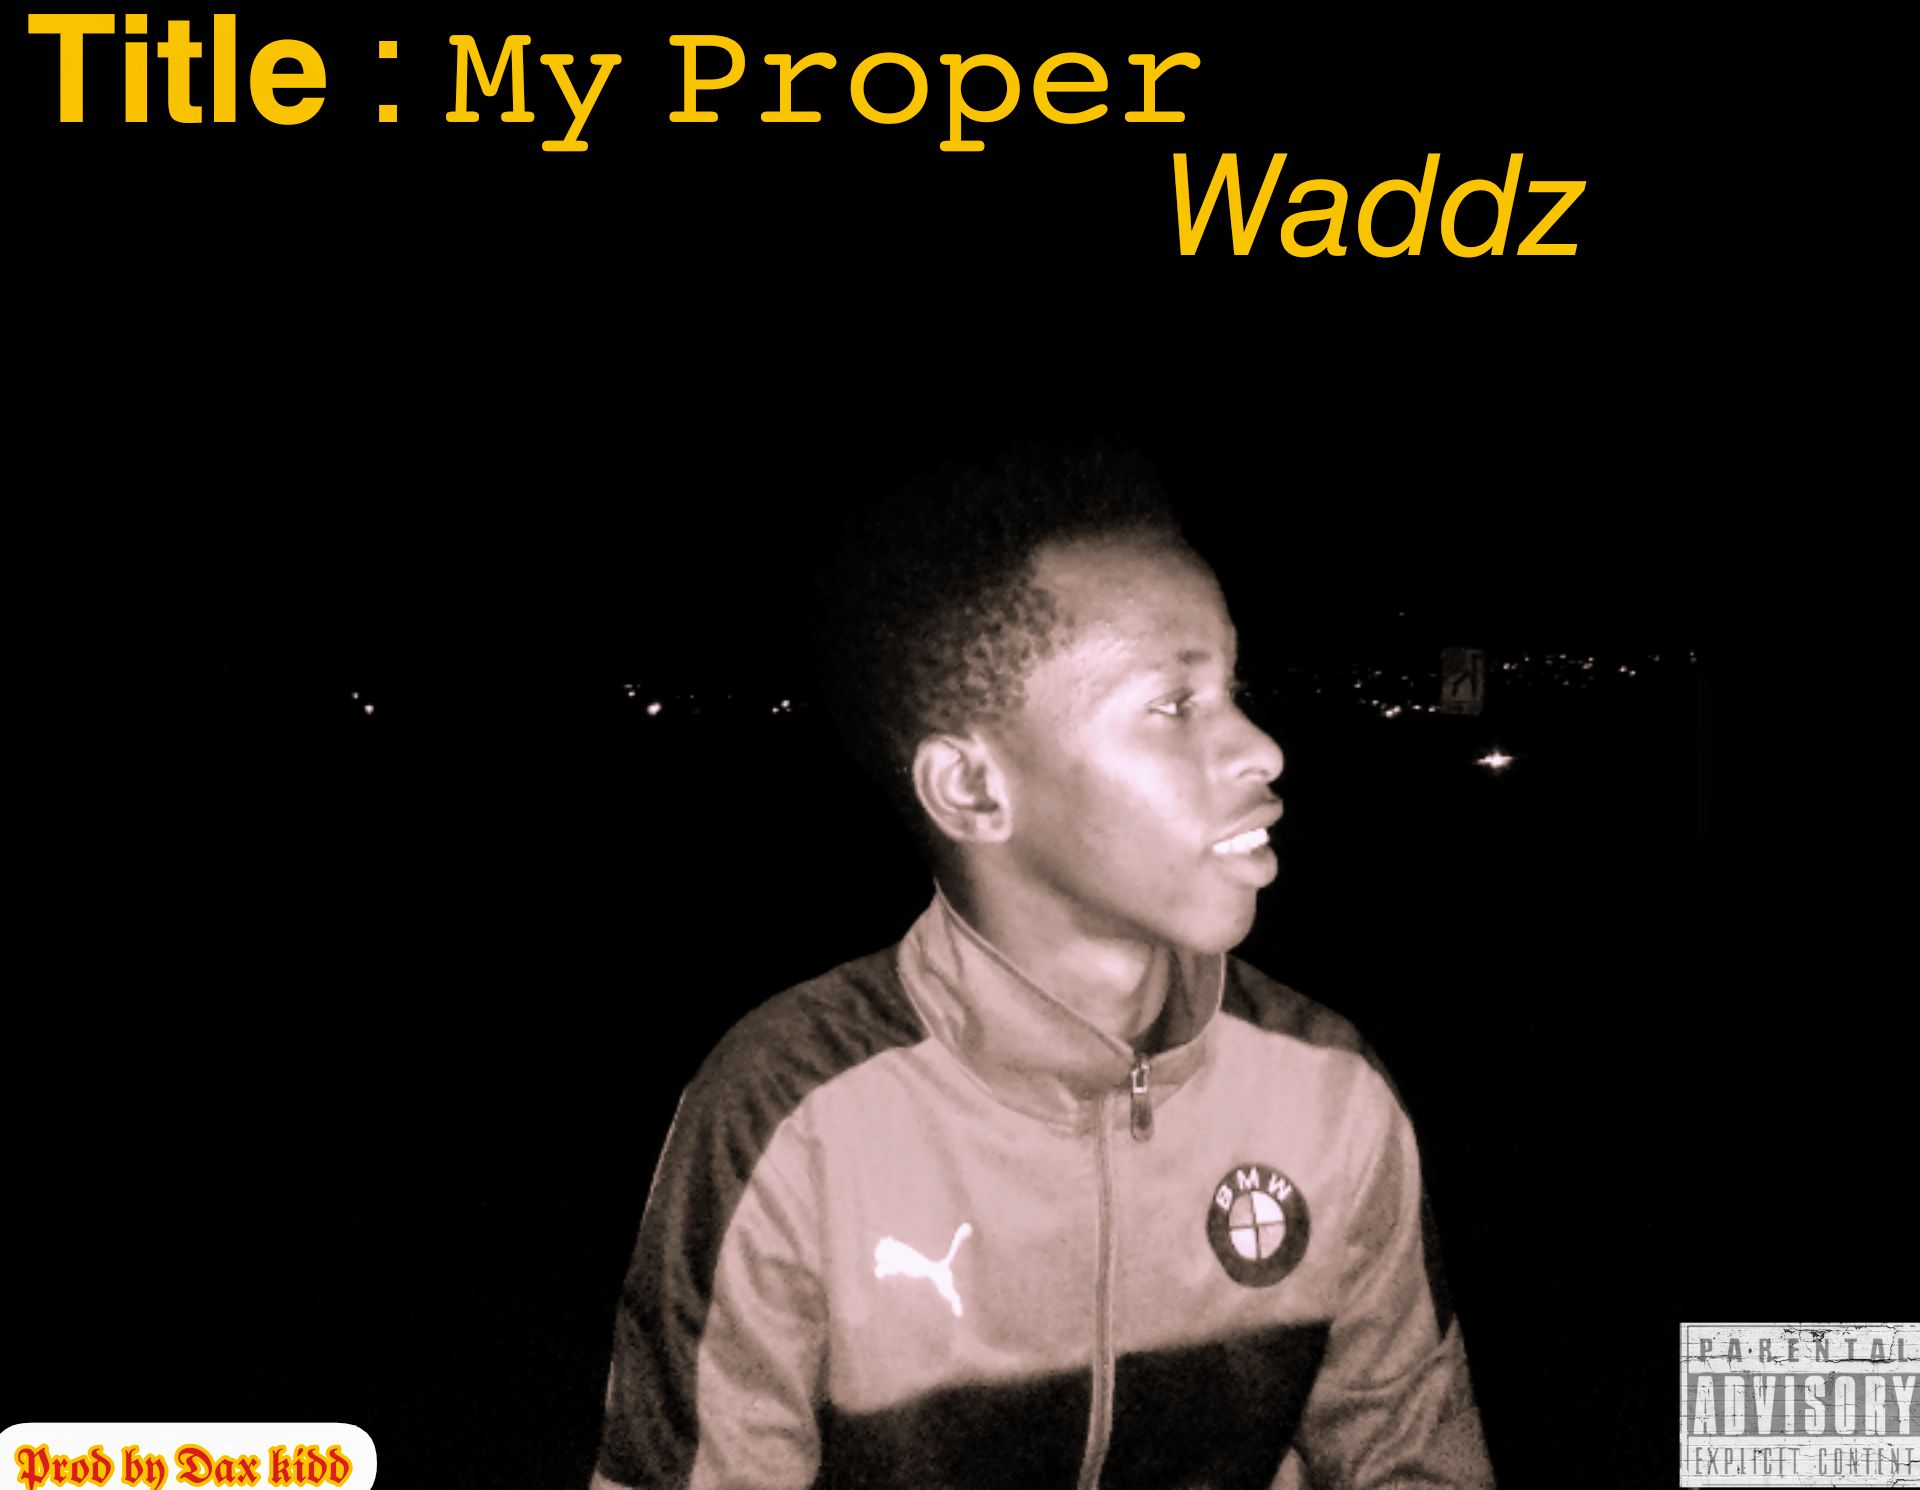 My Proper - Waddz